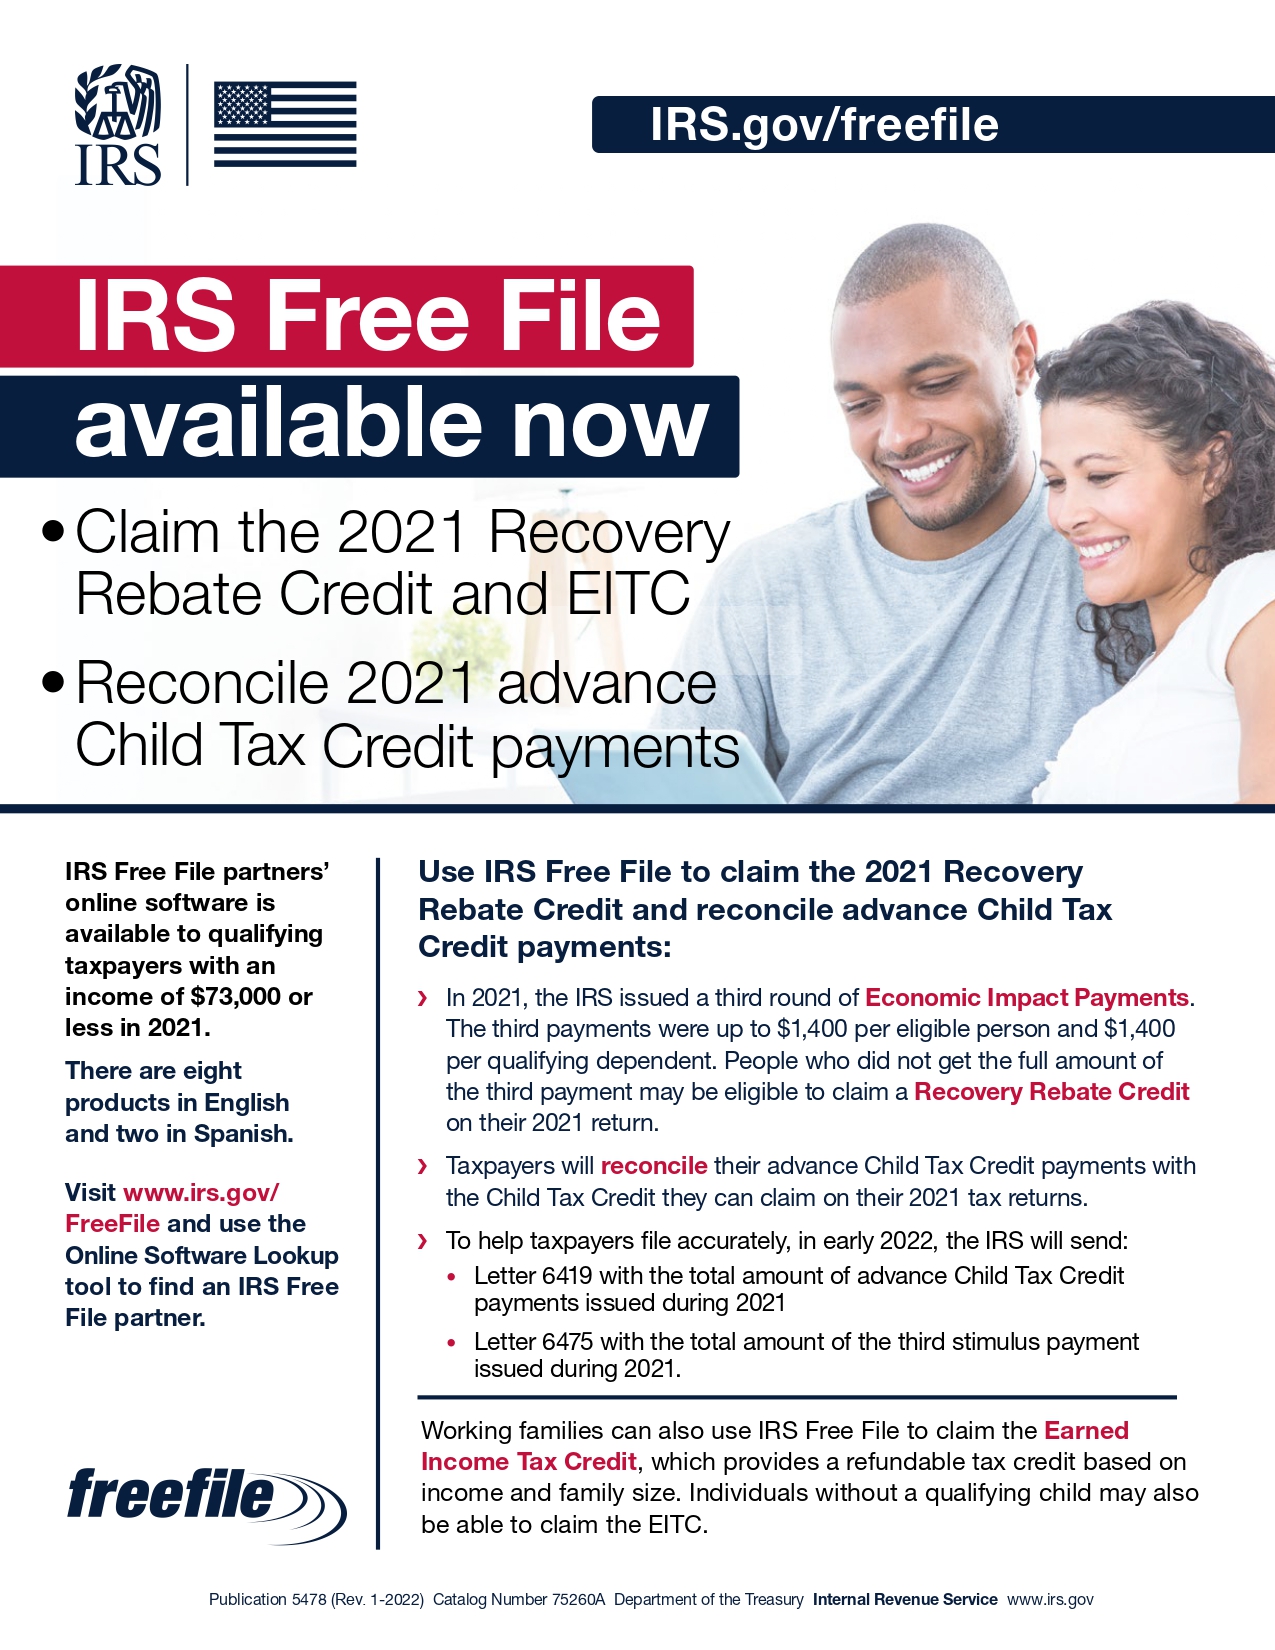 child tax credit flyer